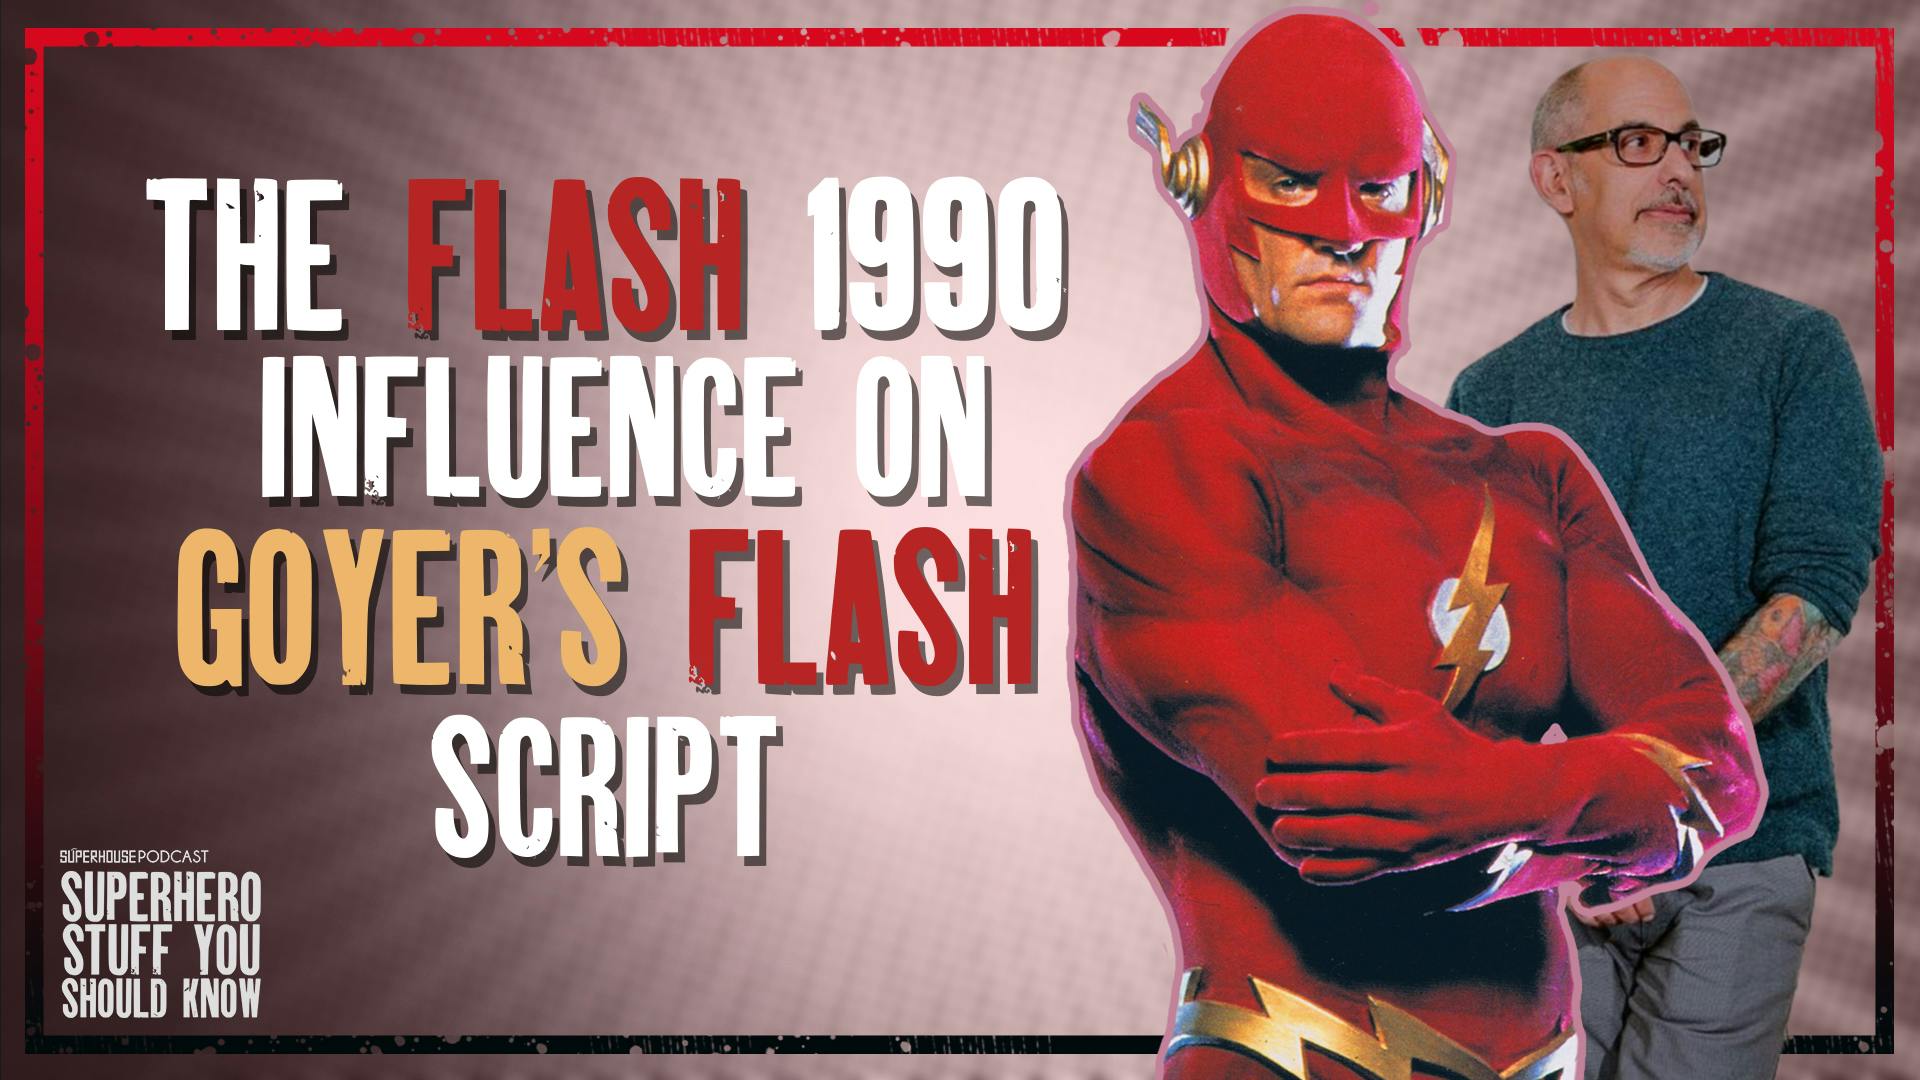 The Flash 1990 Influence on David Goyer’s Flash Script